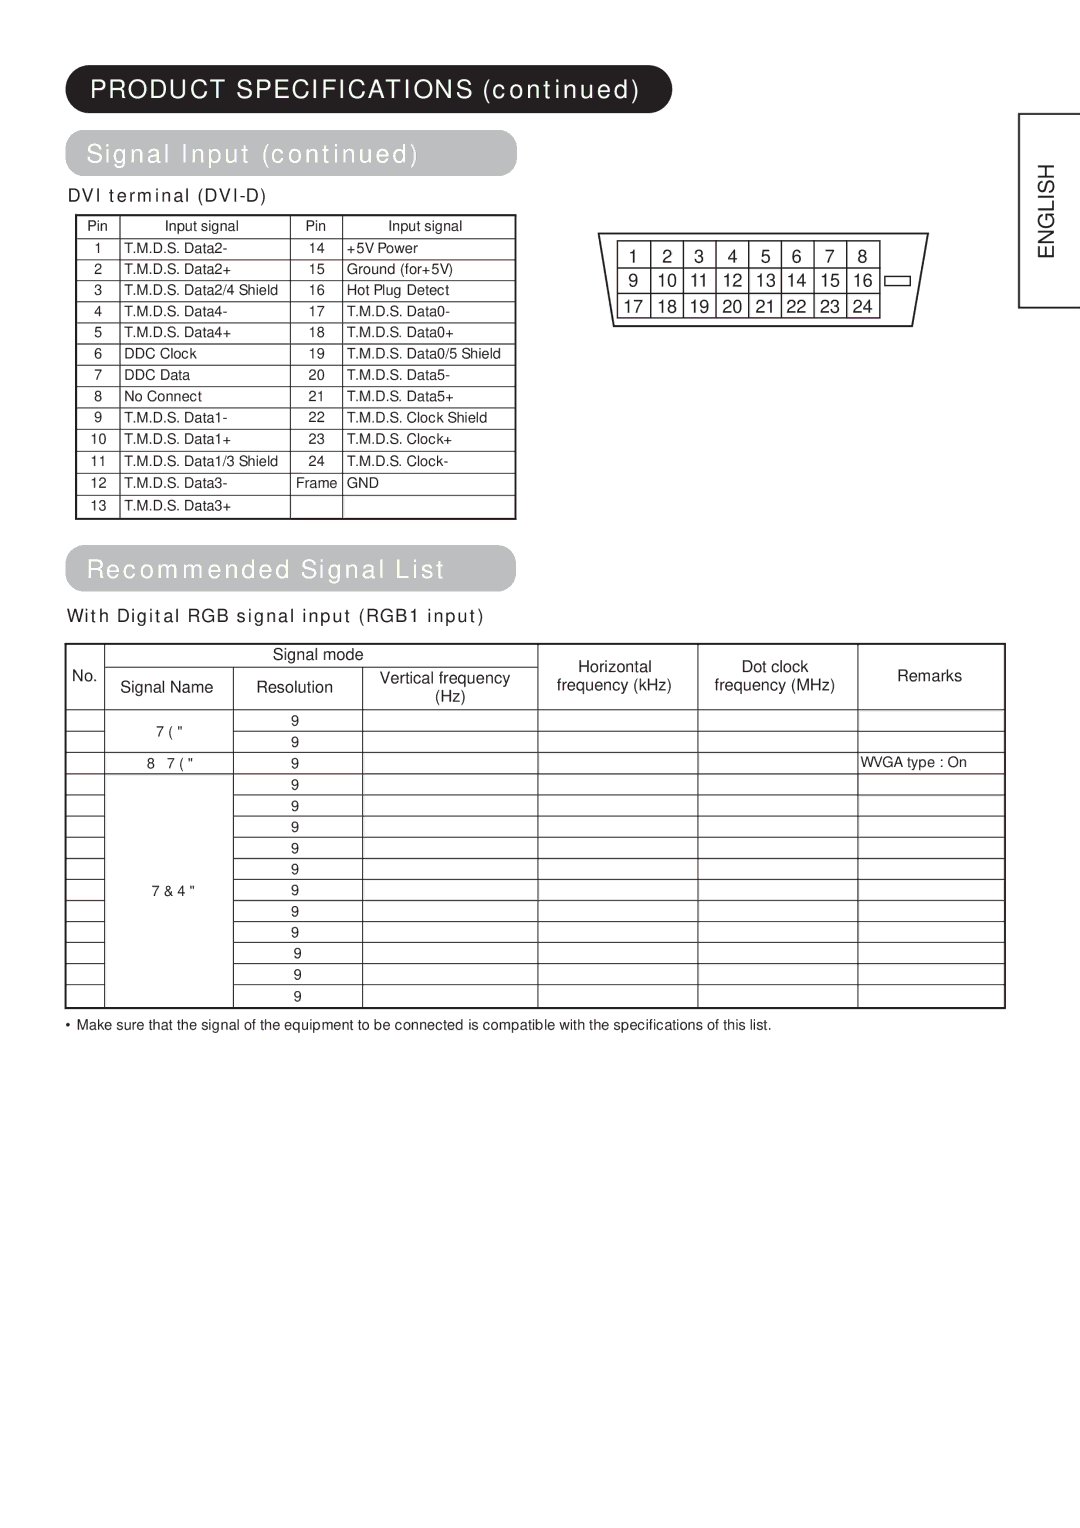 Hitachi CMP4212, CMP4211 Product Specifications Signal Input, Recommended Signal List, DVI terminal DVI-D, D.S. Data3+ 